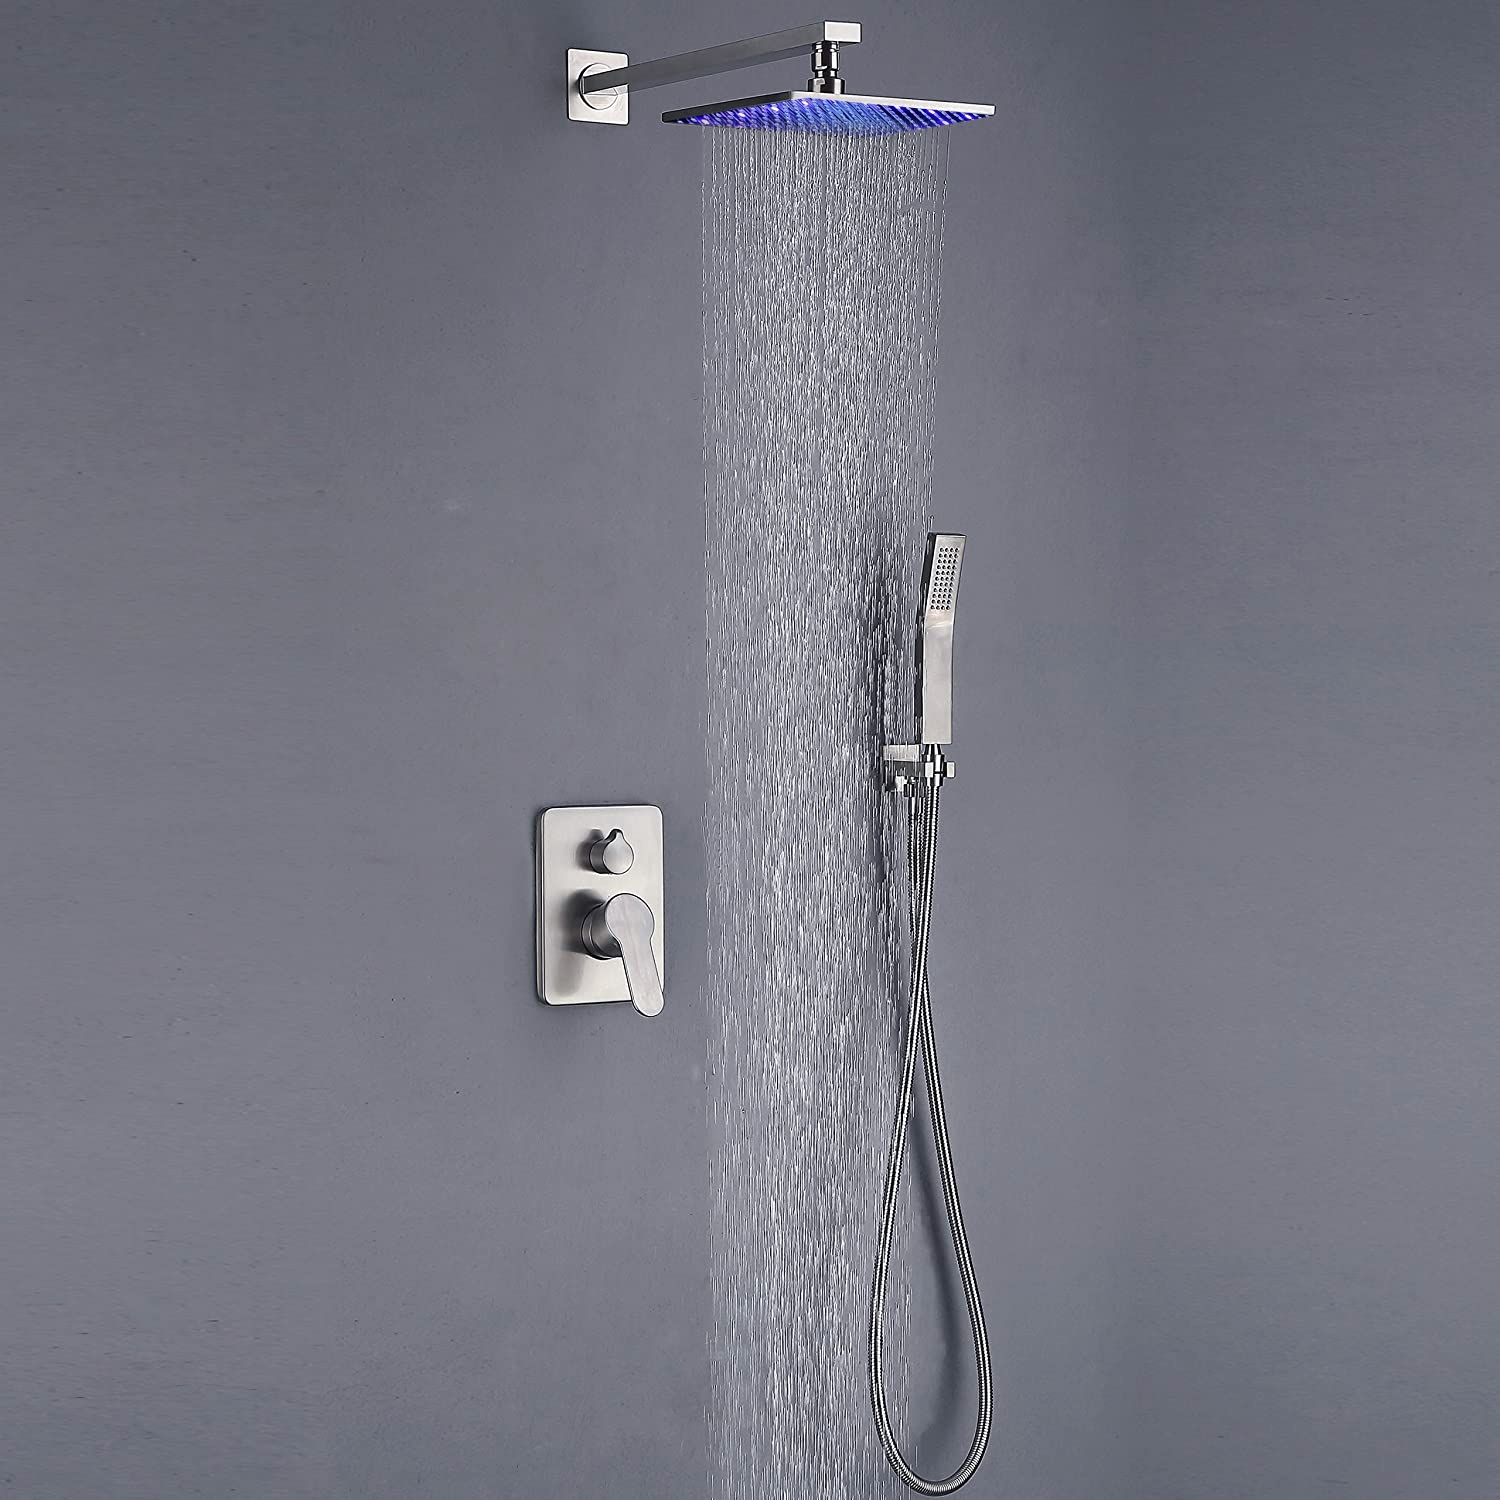 BathSelect Brushed Nickel Wall Mount Thermostatic Mixer LED Shower Set